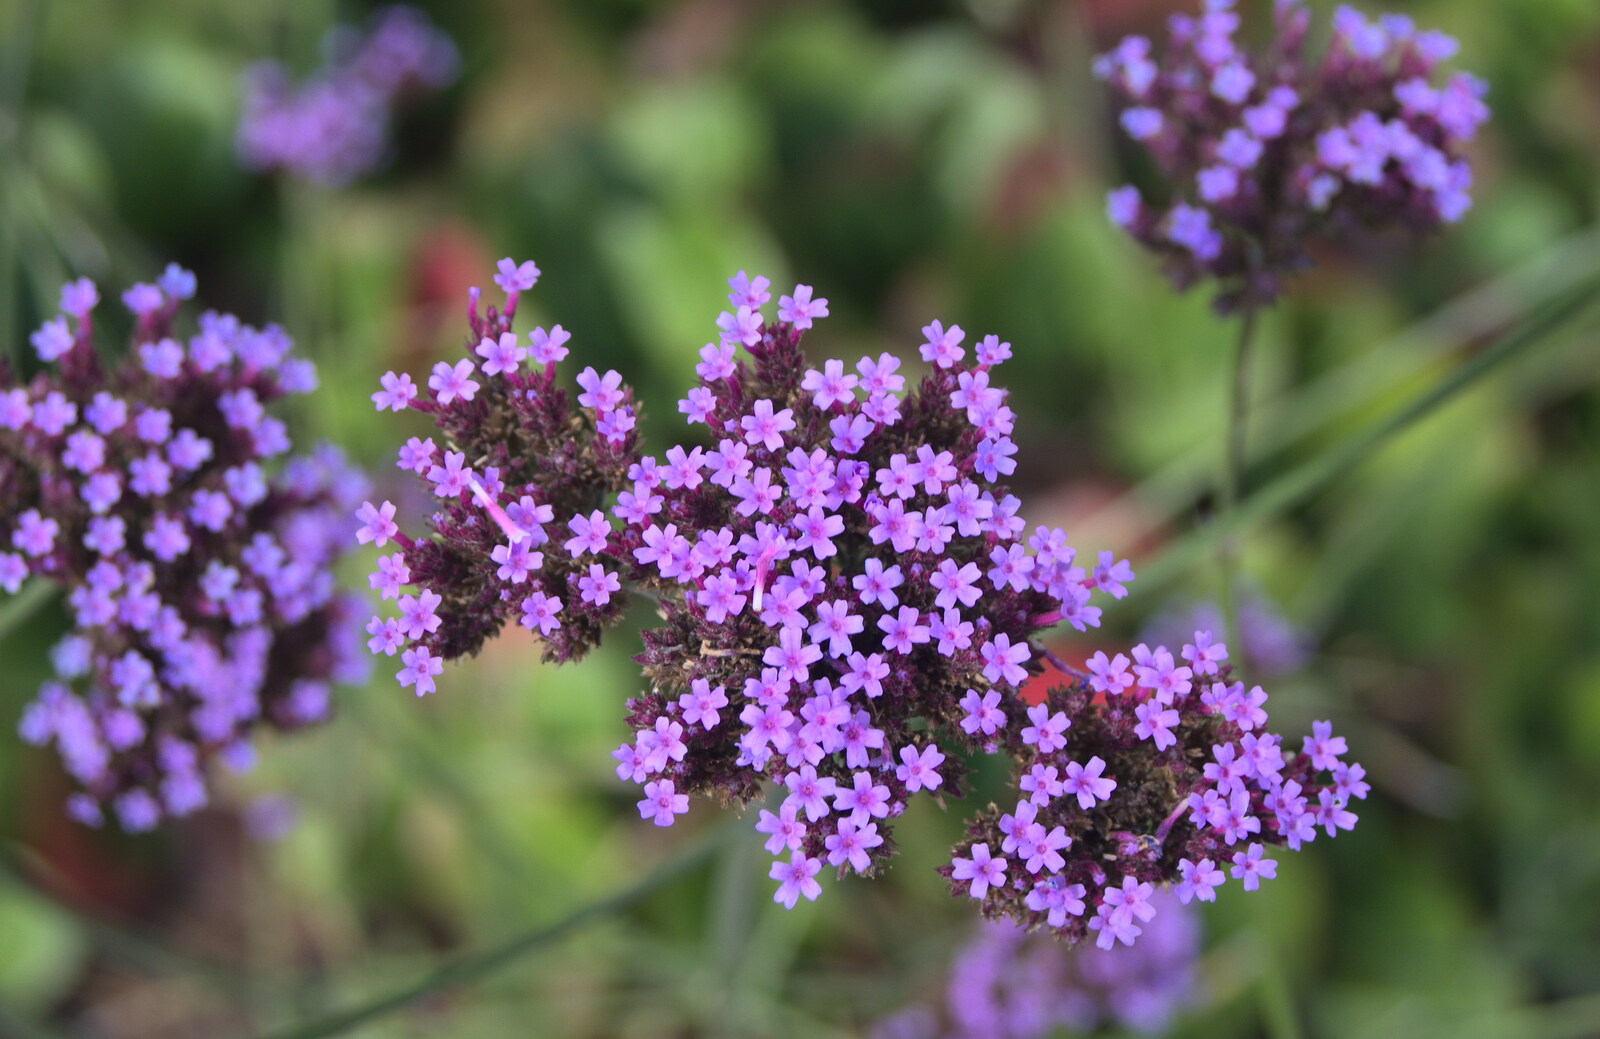 Small purpley pentafoil flowers from Alan Bloom's Gardens, Bressingham, Norfolk - 6th October 2012